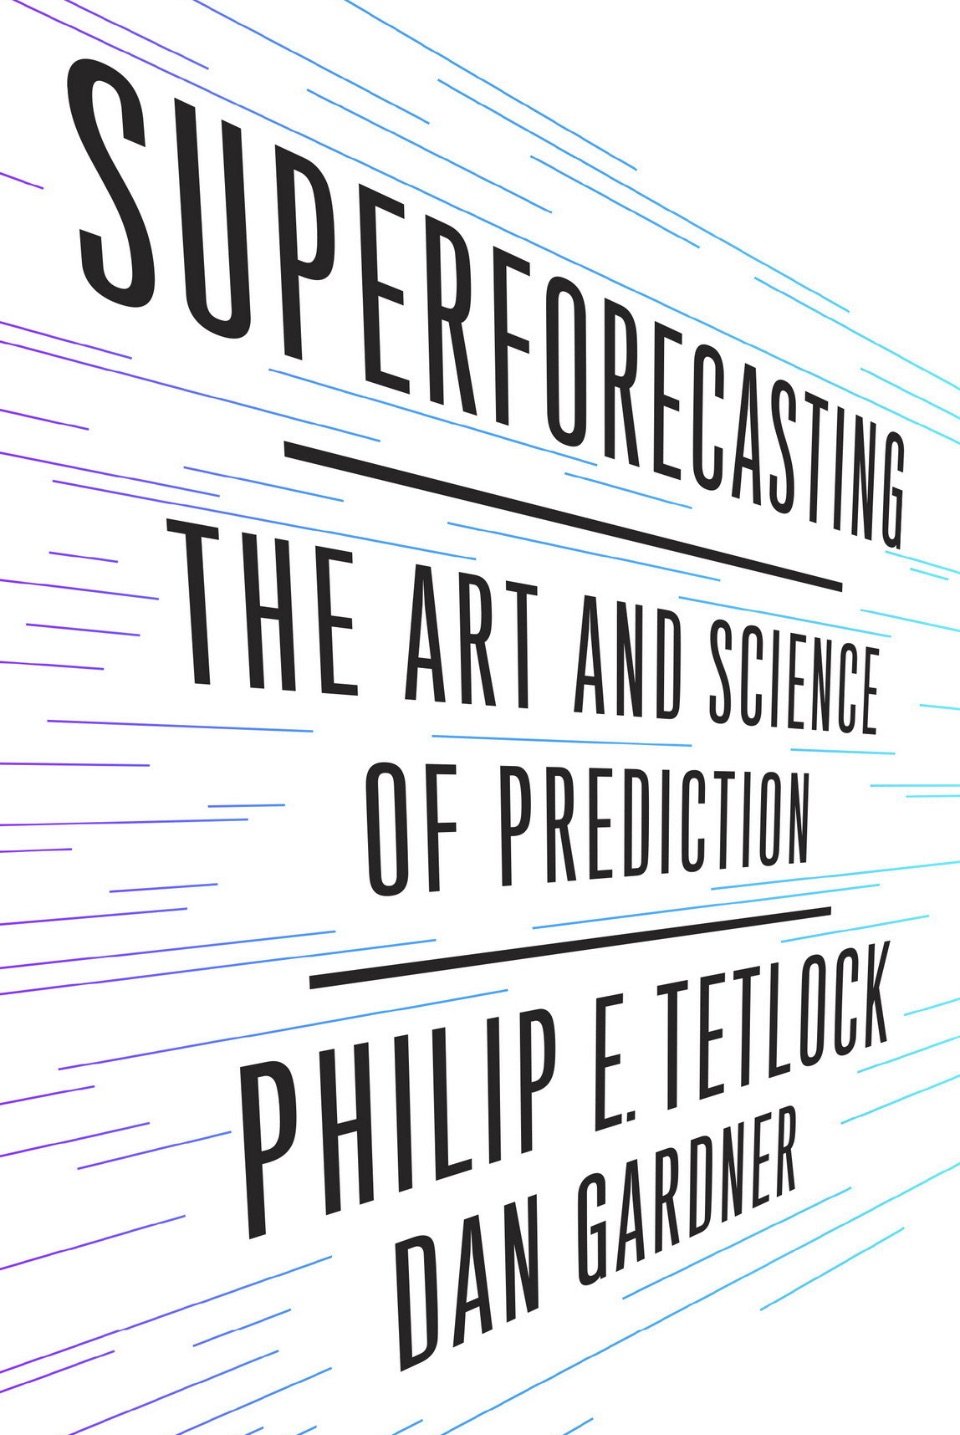 Superforecasting by Tetlock.jpeg